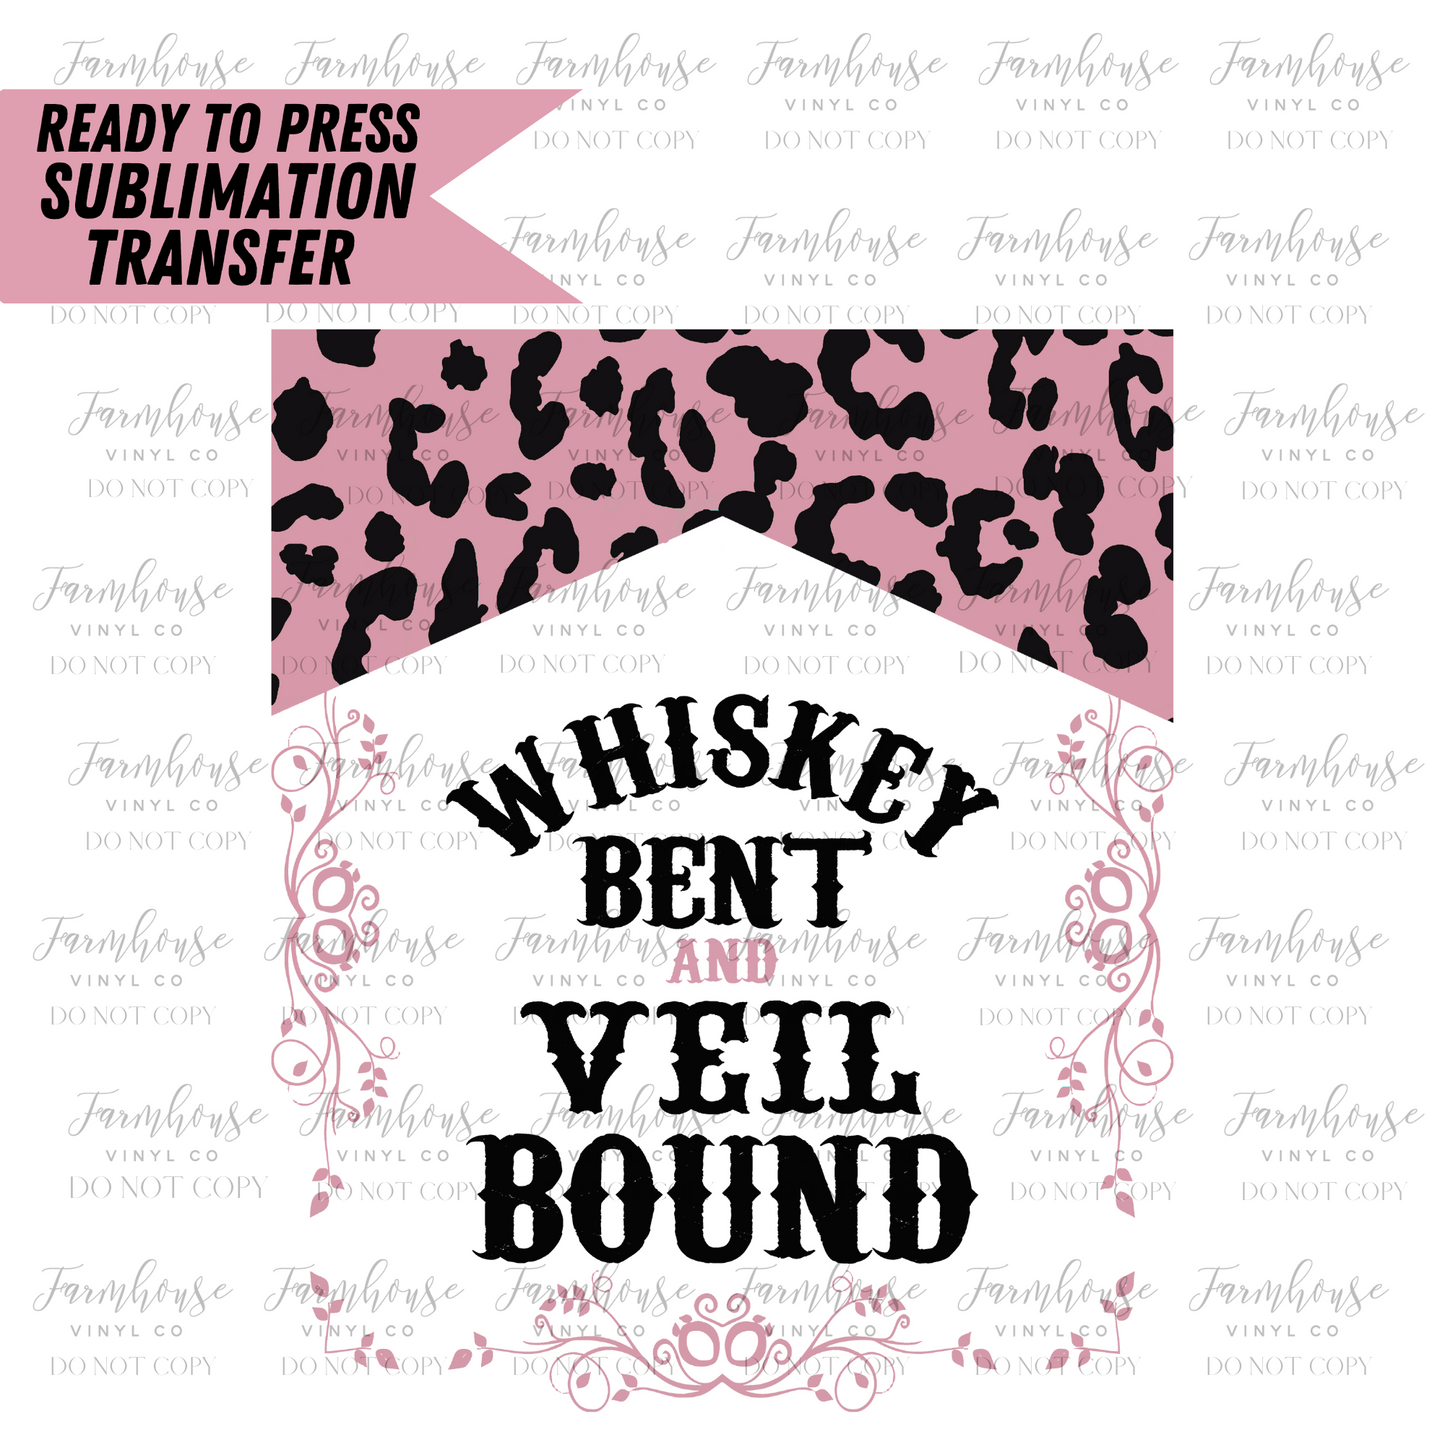 Whiskey Bent And Veil Bound Ready To Press Sublimation Transfer - Farmhouse Vinyl Co